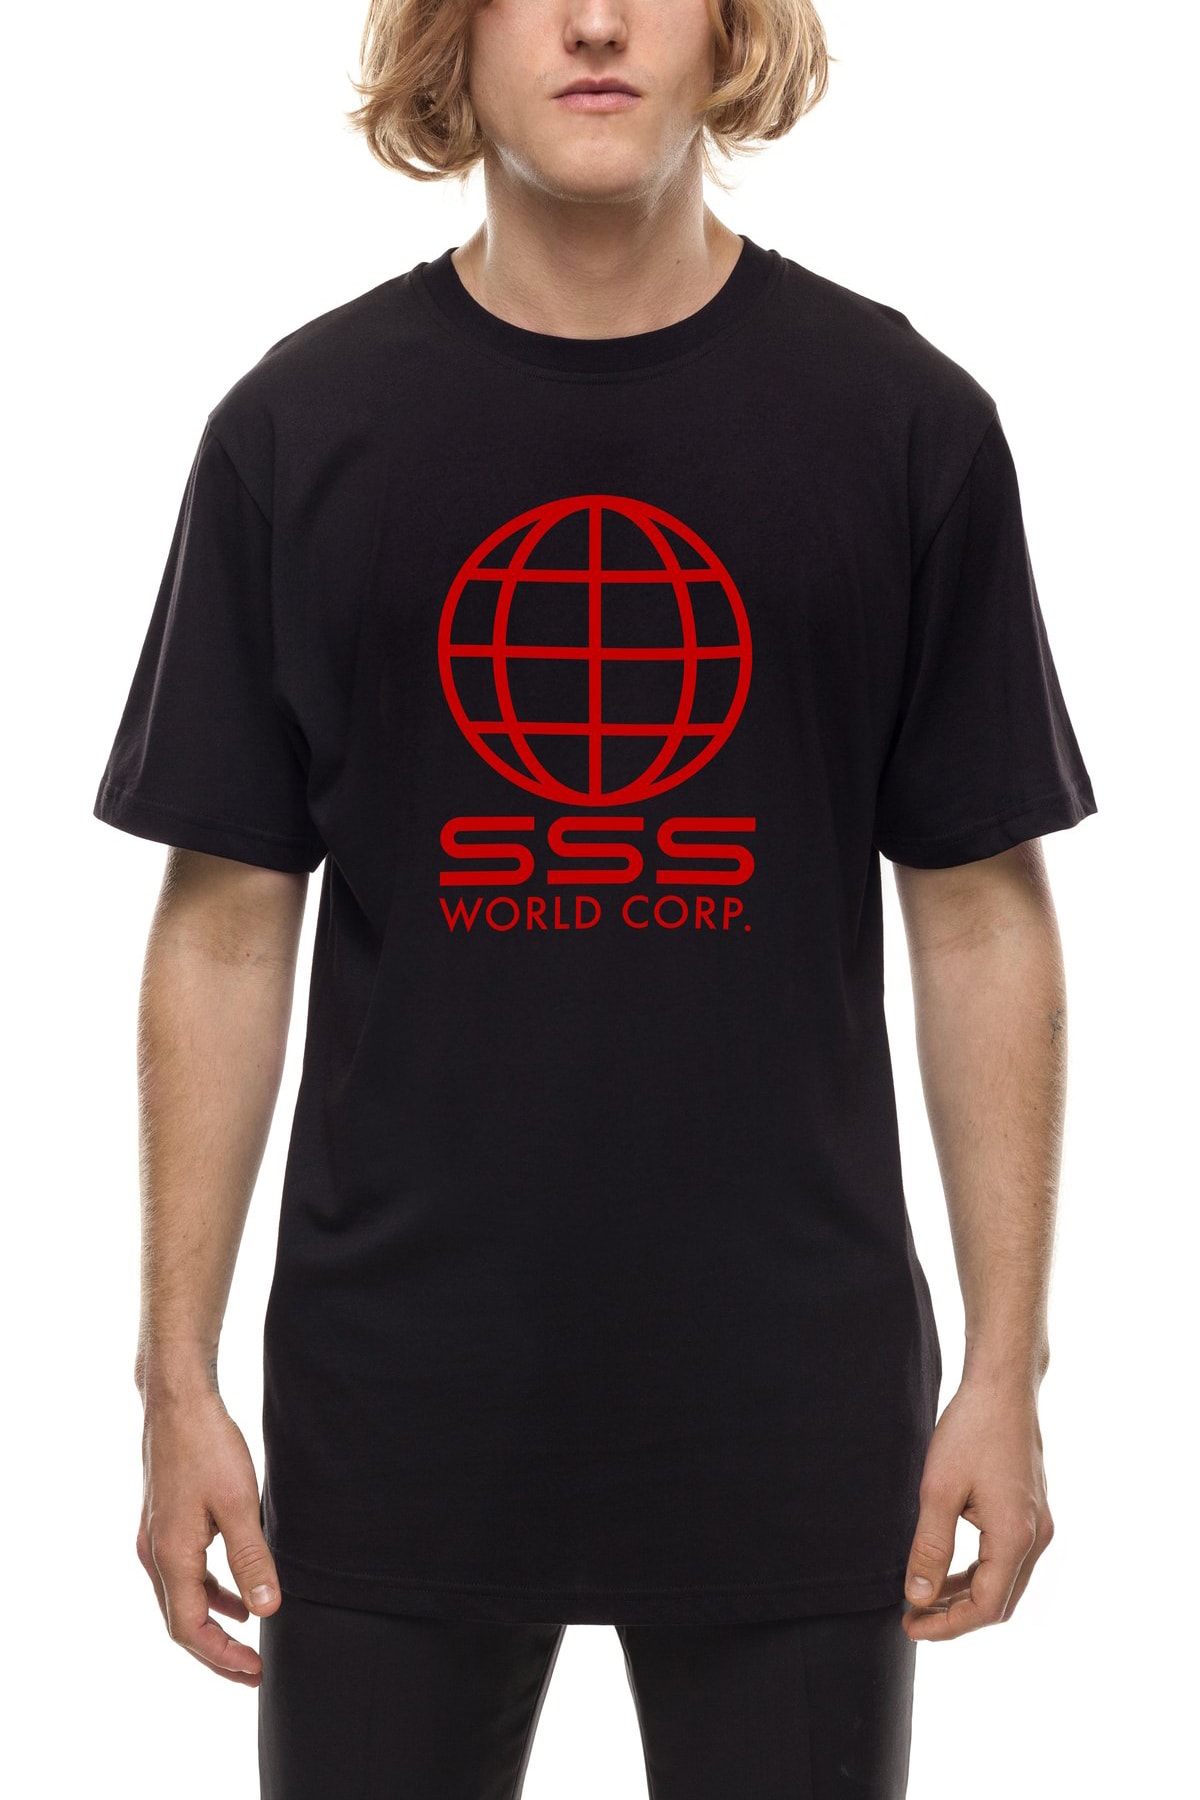 Justin O'Shea 個人品牌 SSS World Corp 登陸 032c